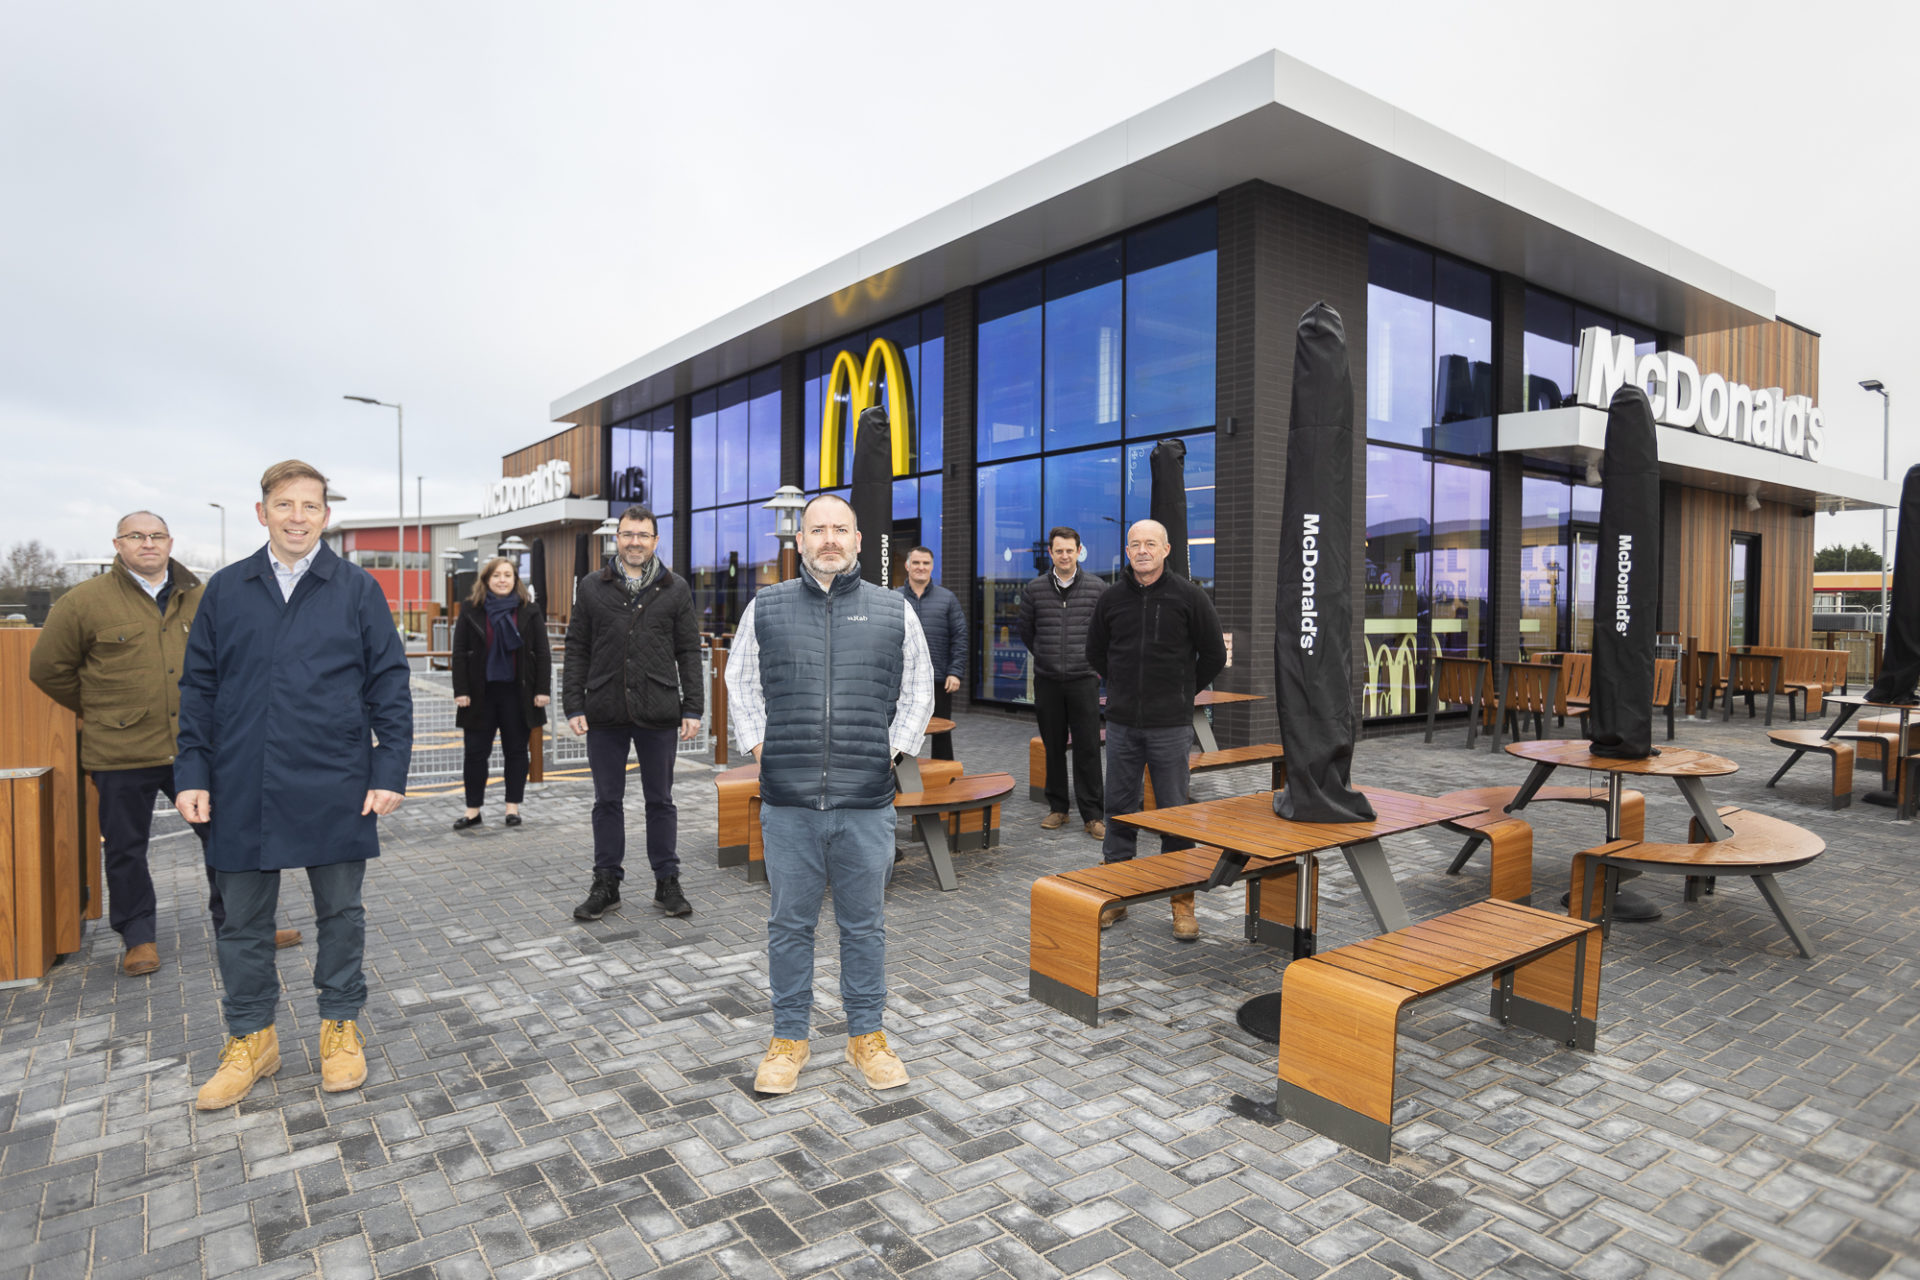 New Generation McDonalds Restaurant handed over